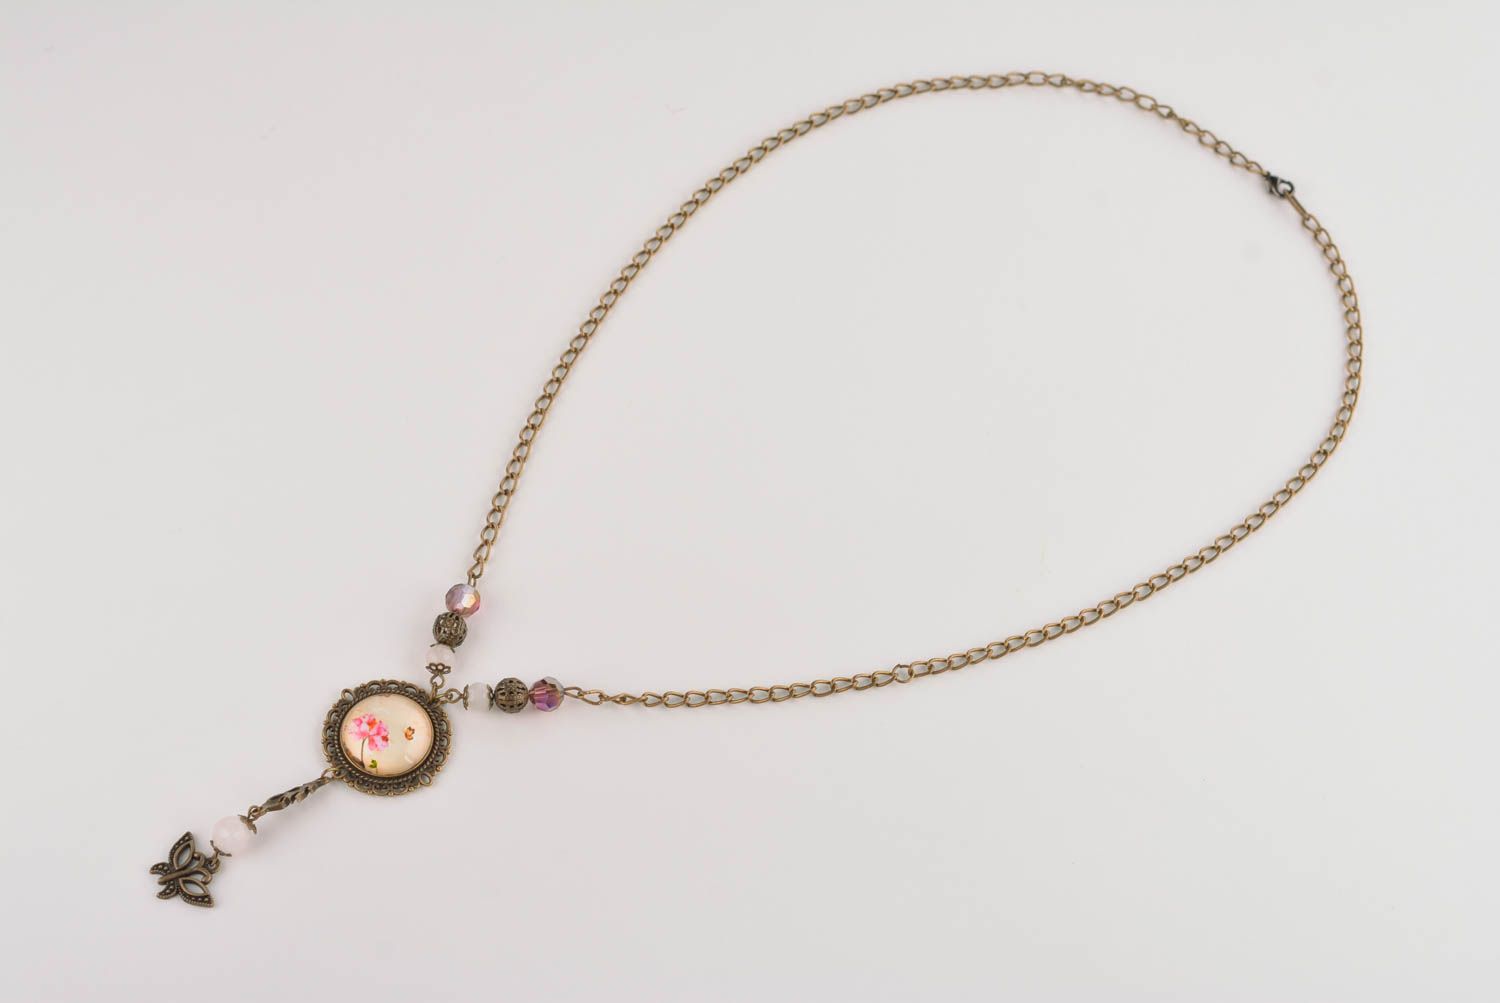 Unusual handmade glass pendant metal necklace metal jewelry designs gift ideas photo 4